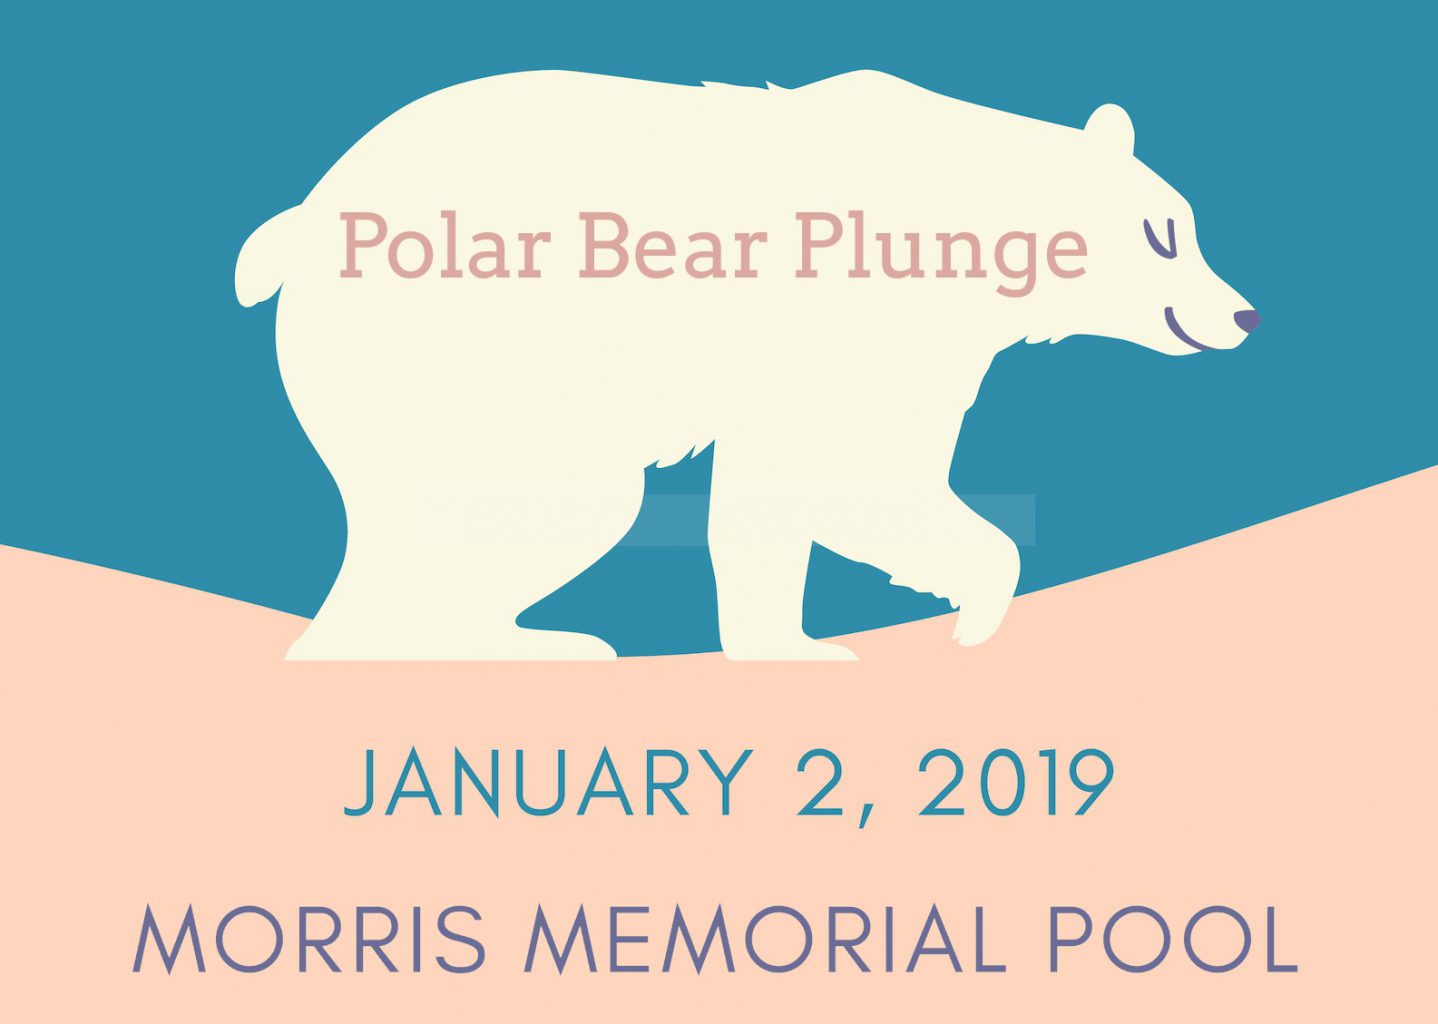 Polar Bear Plunge is an Elgin tradition.